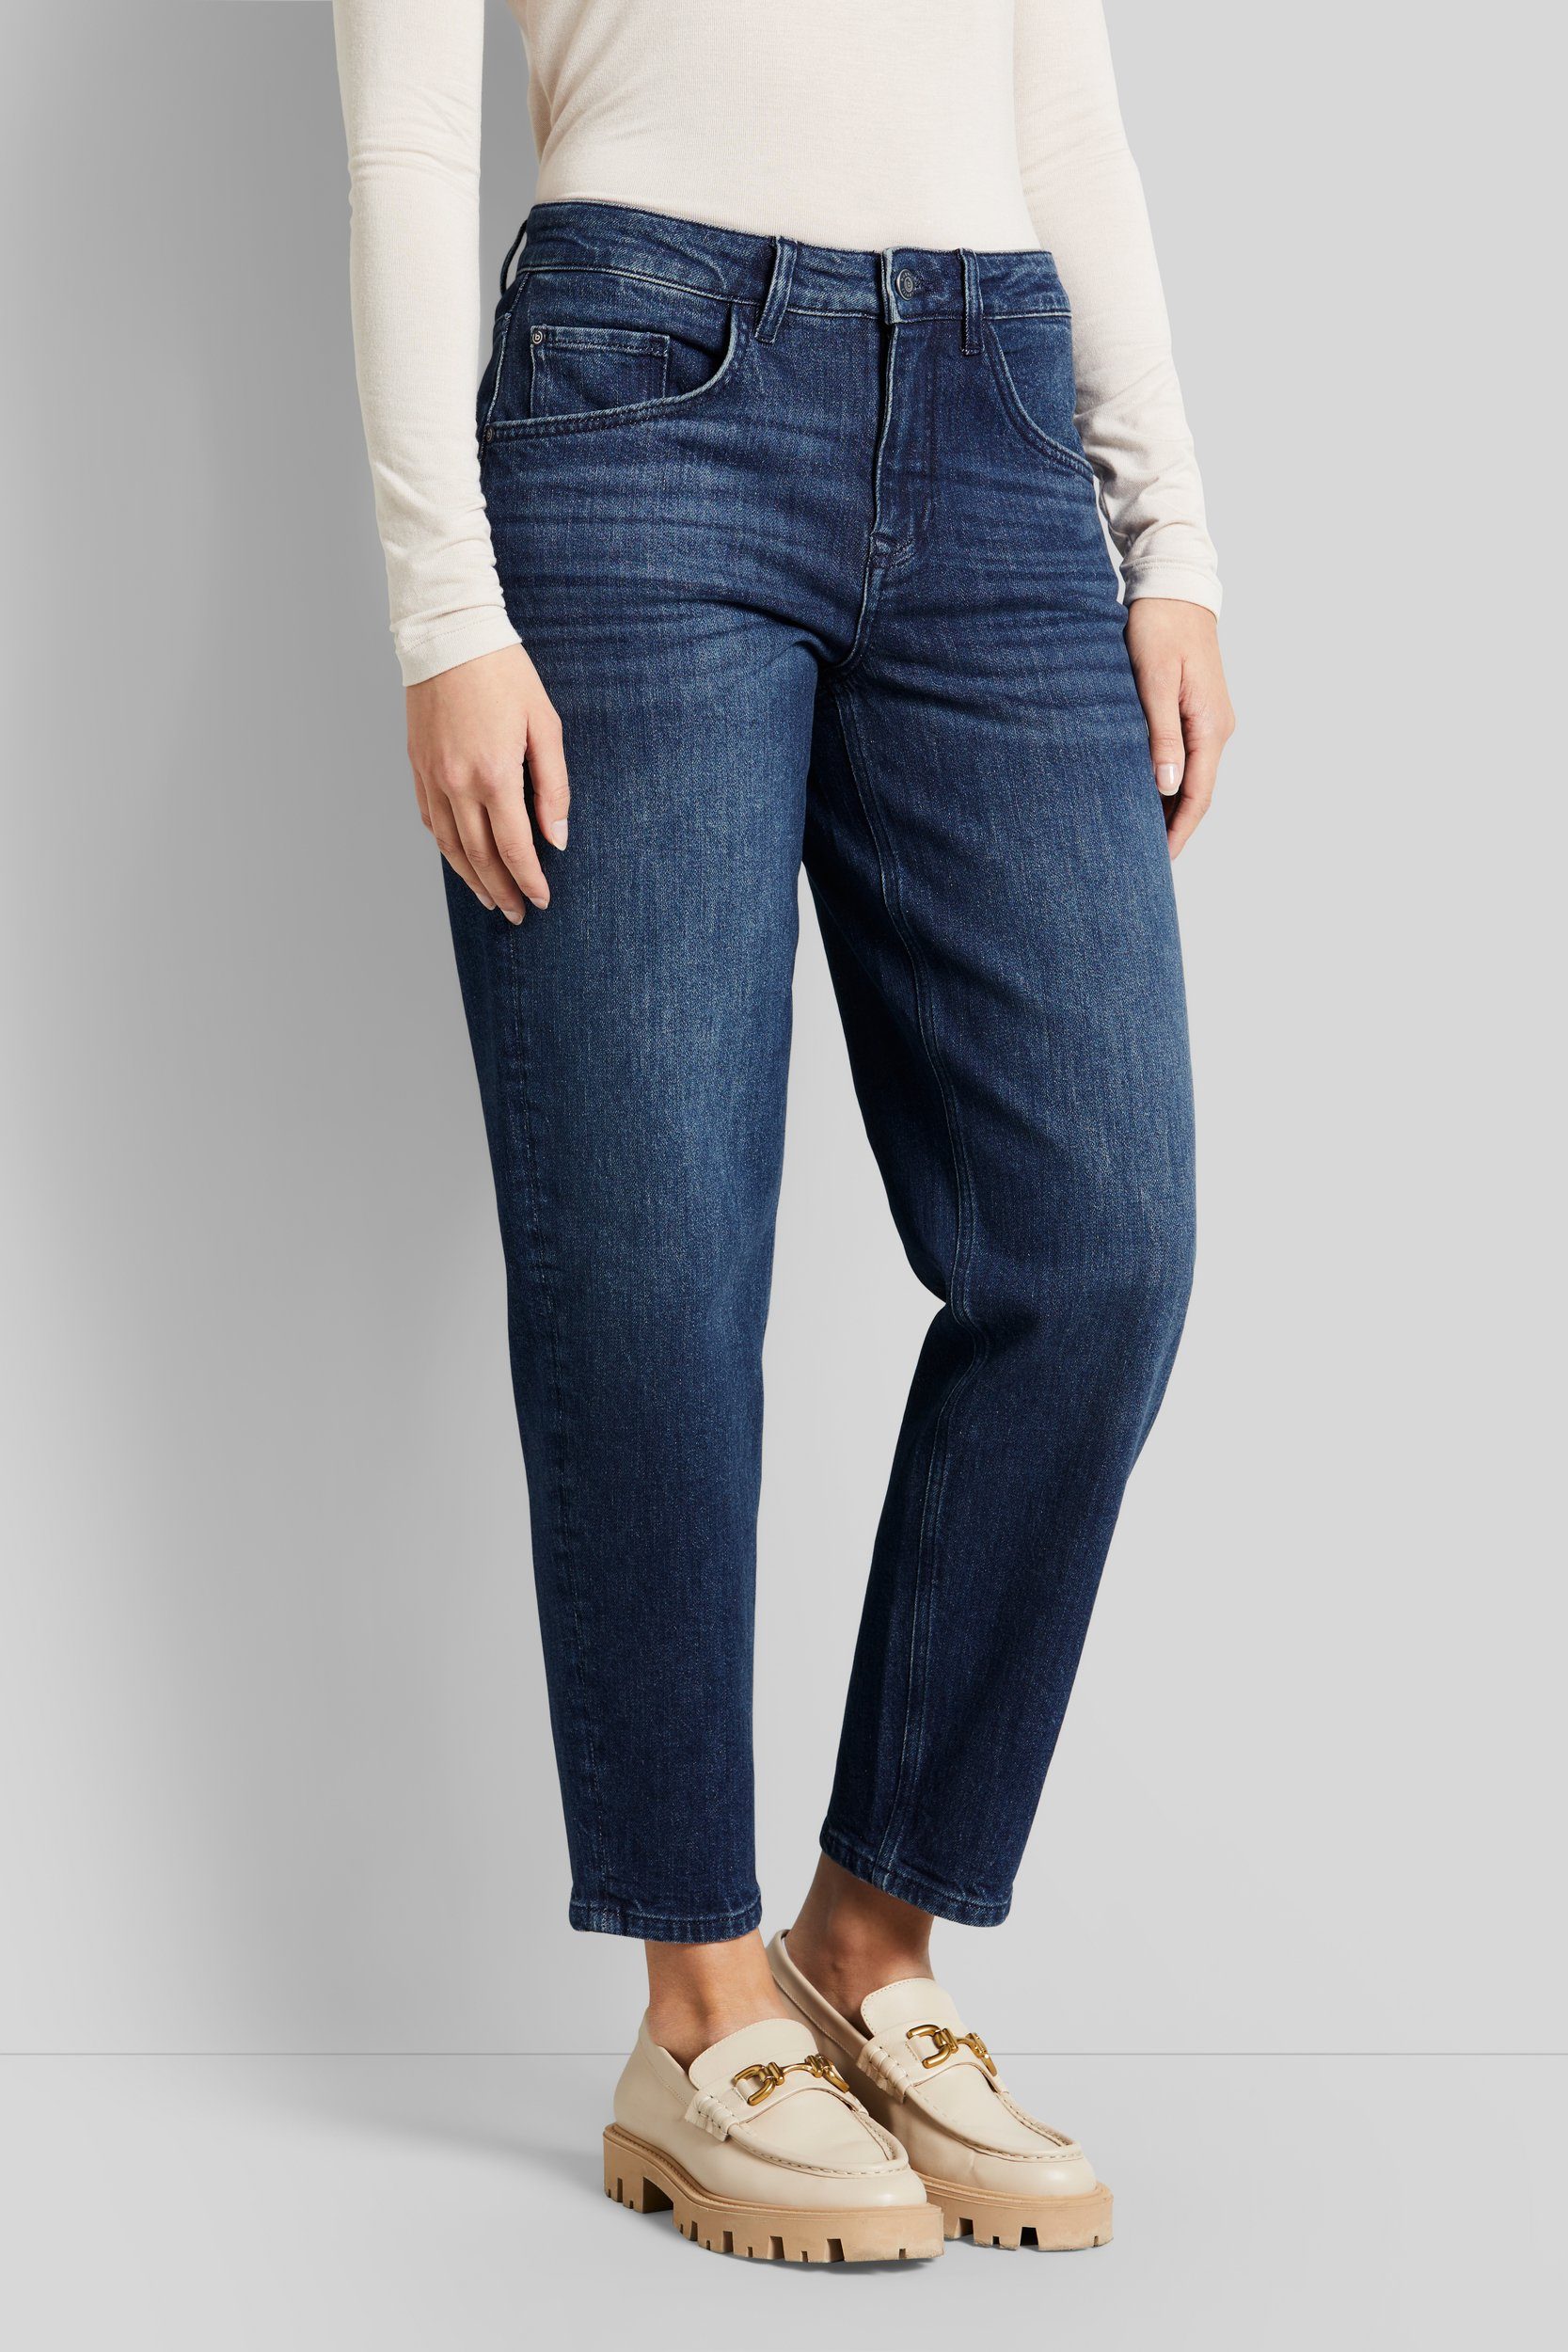 Schnitt mit lockerem bugatti 5-Pocket-Jeans